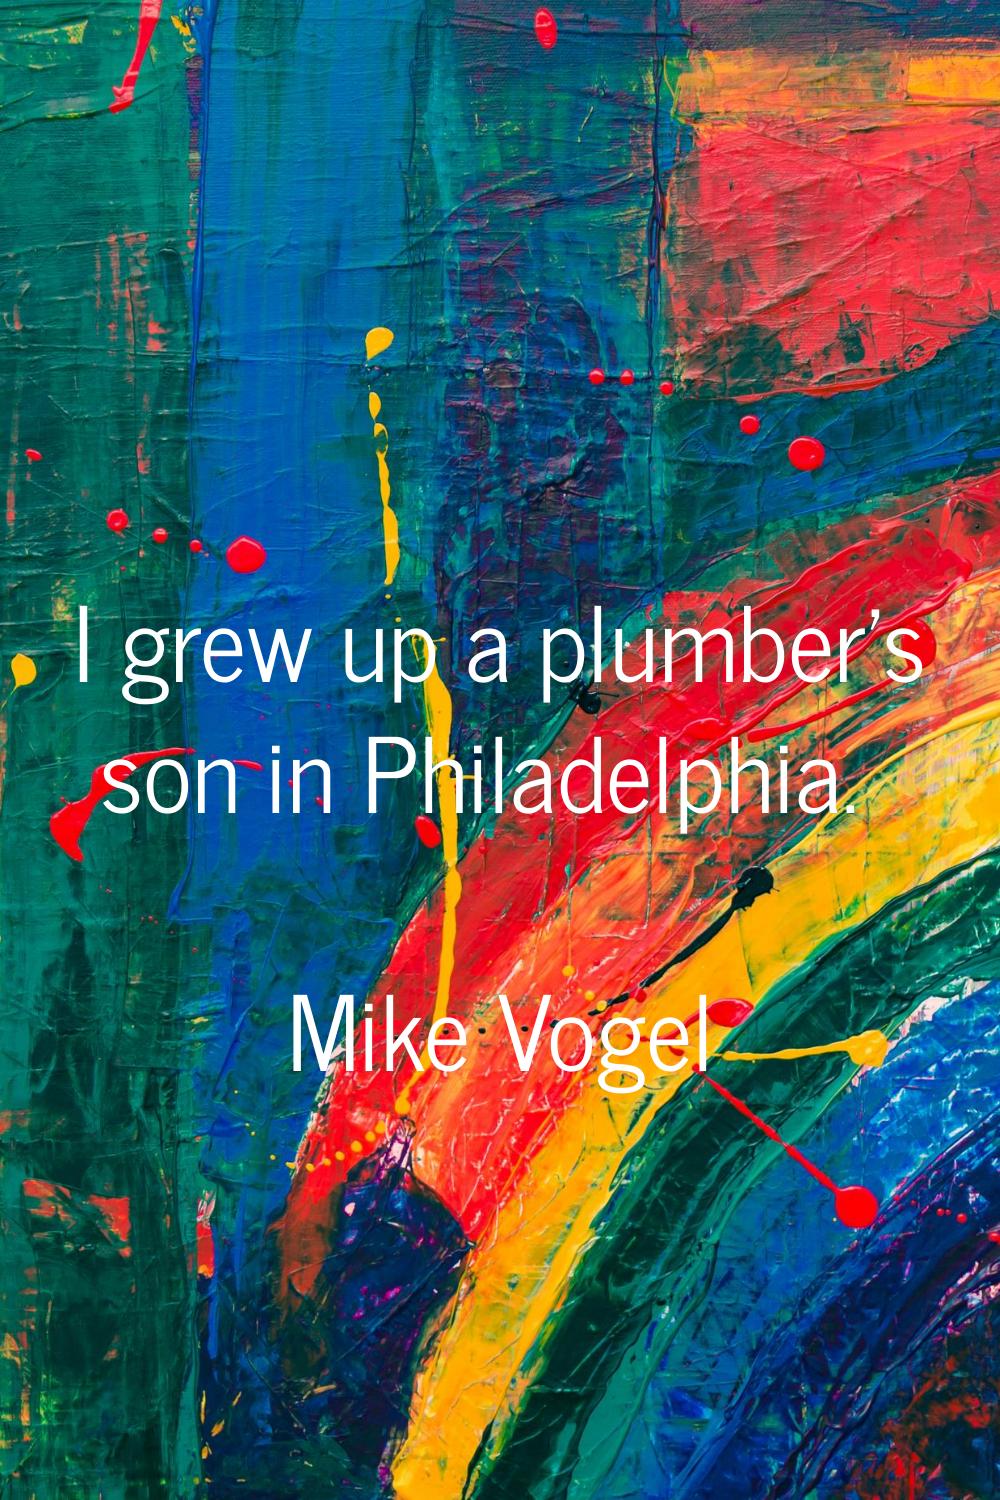 I grew up a plumber's son in Philadelphia.